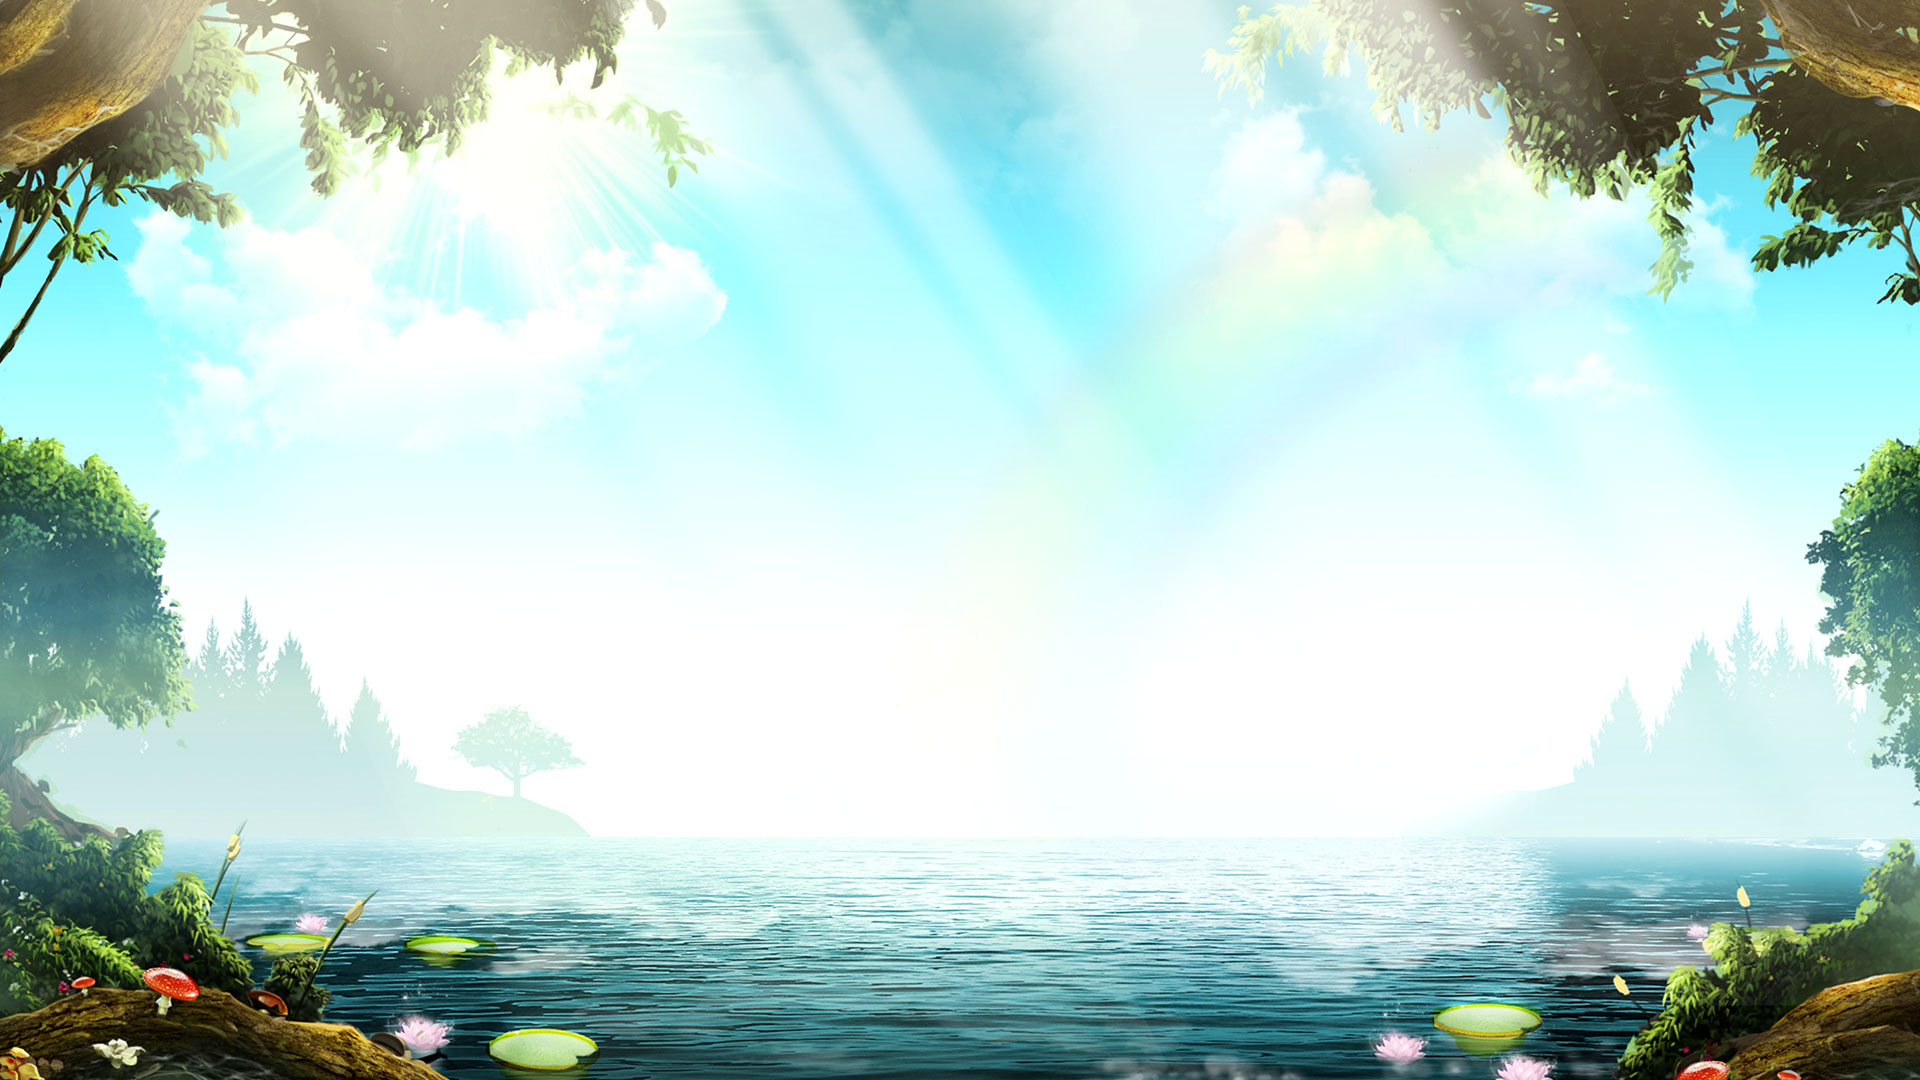 Game hight resolution background Emerald Isle